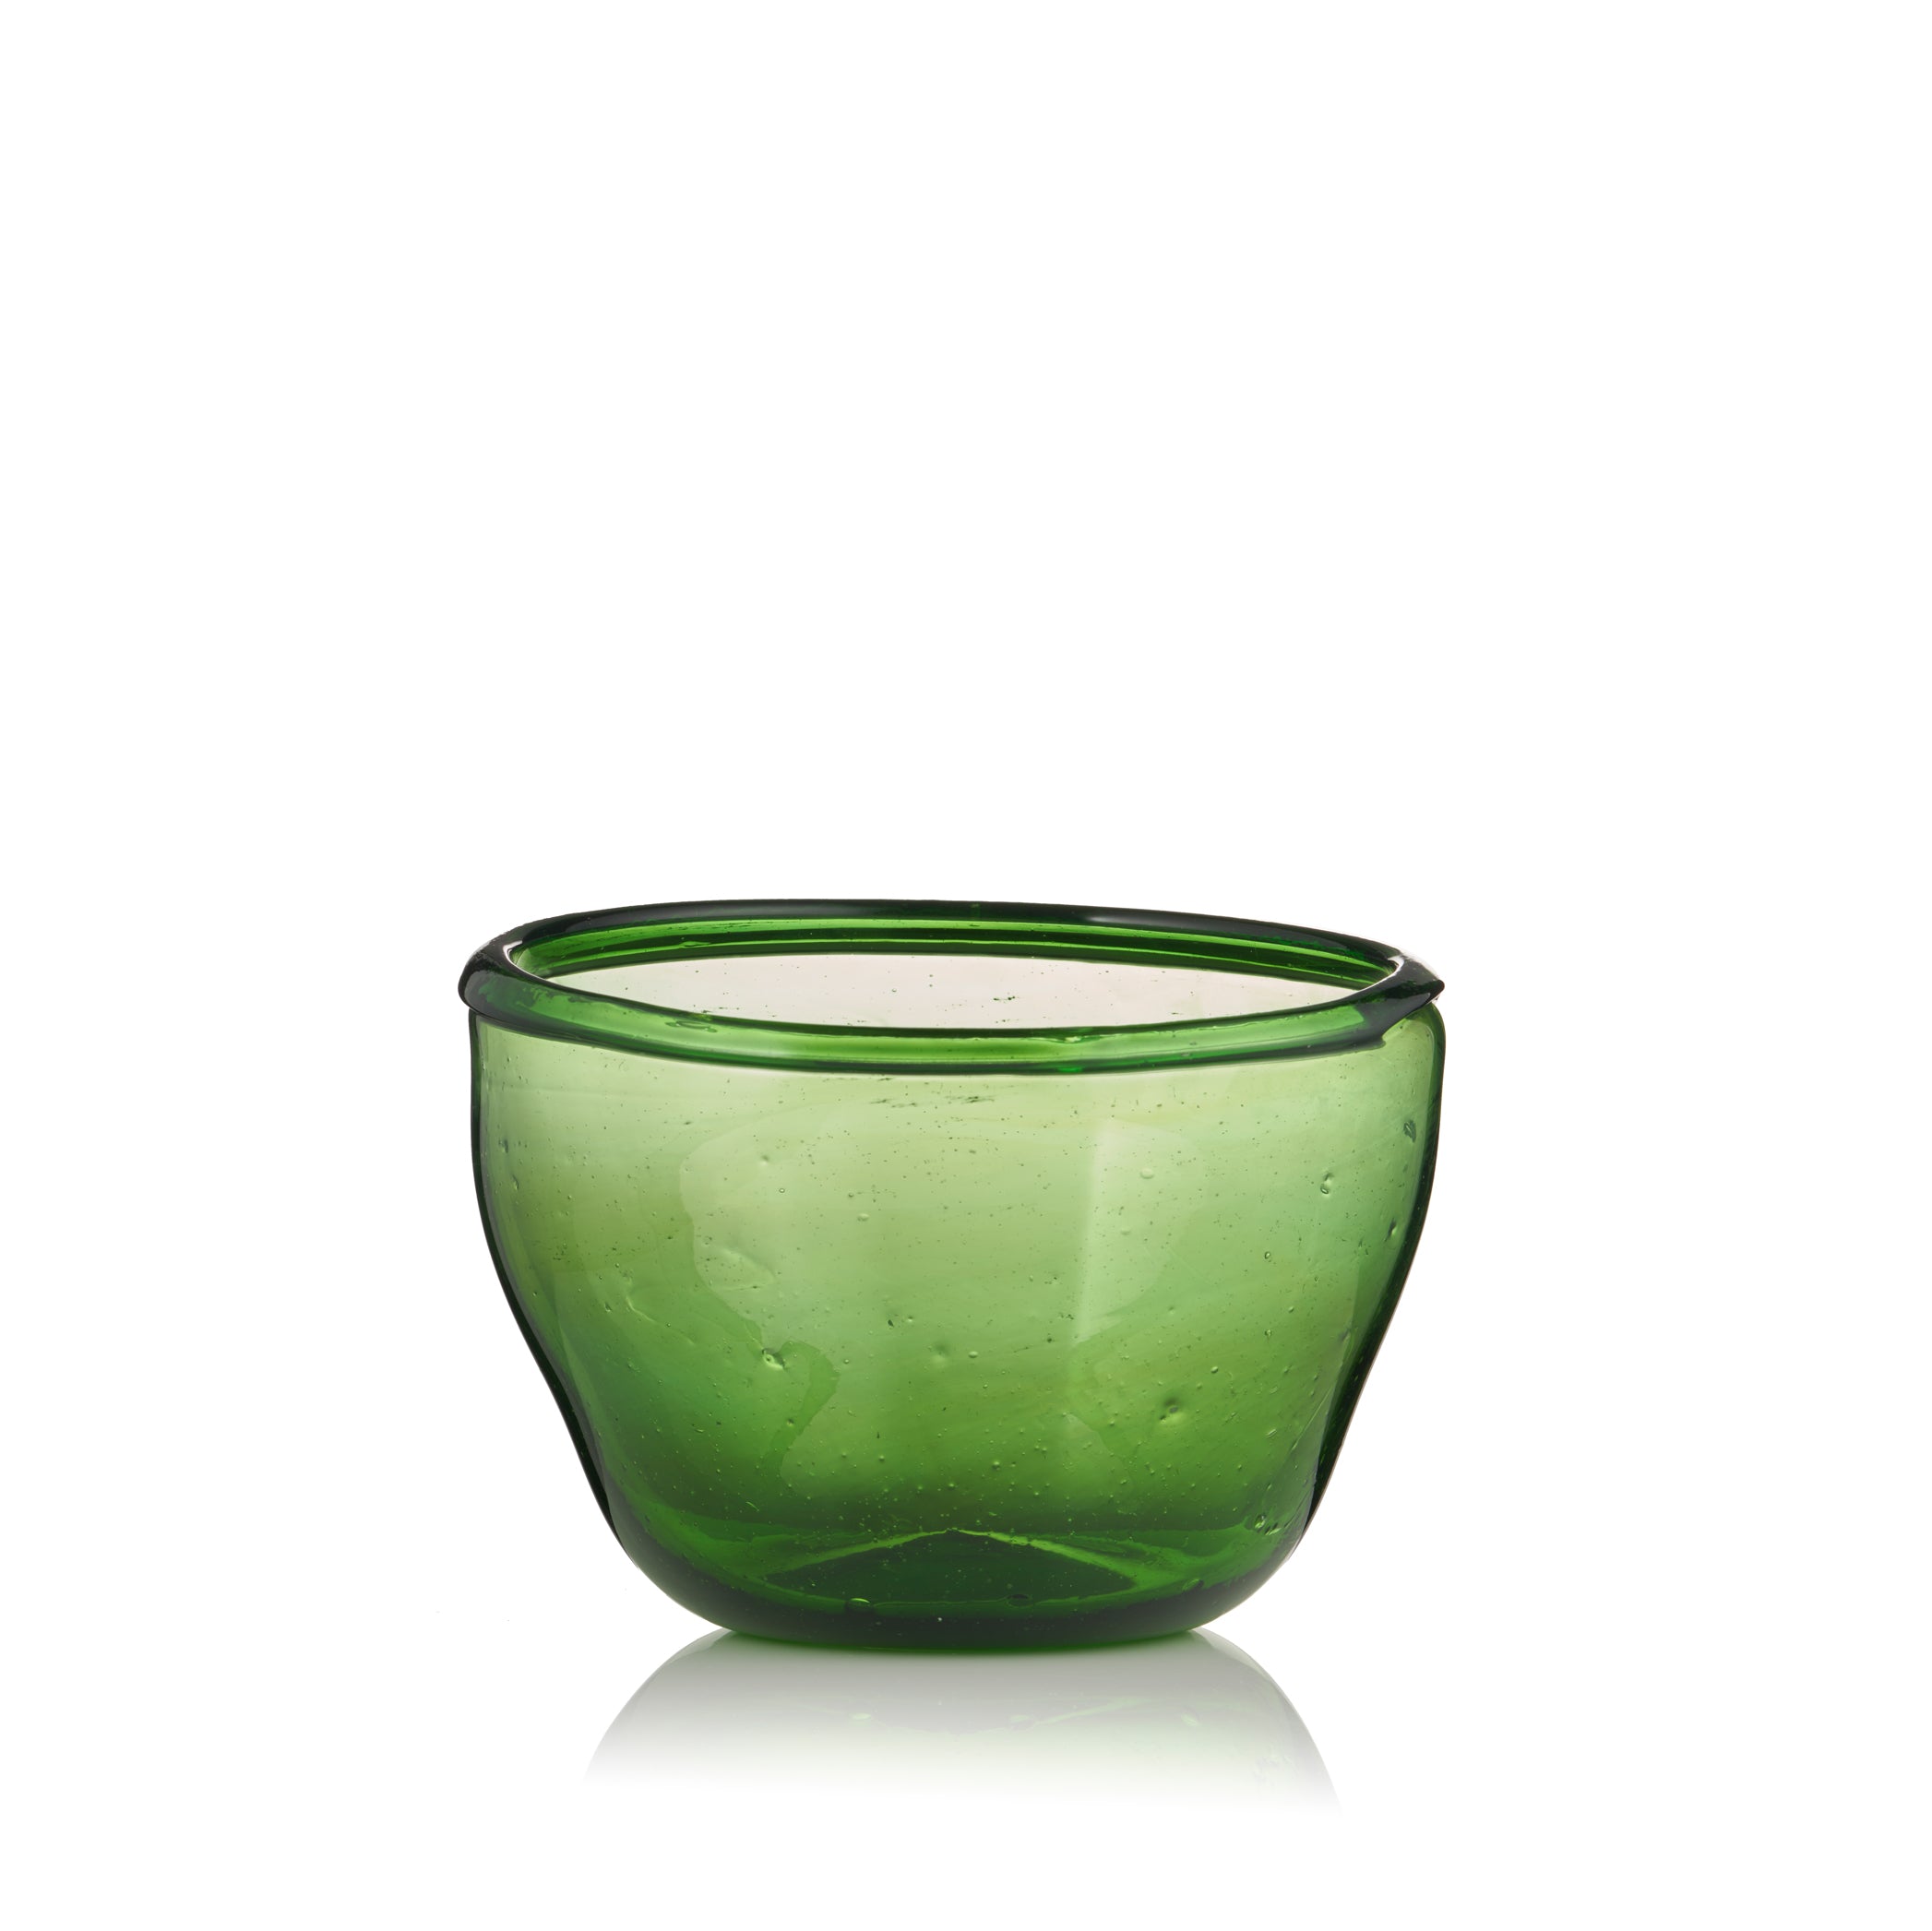 Handblown Serving Bowl In Olive Green, 17cm